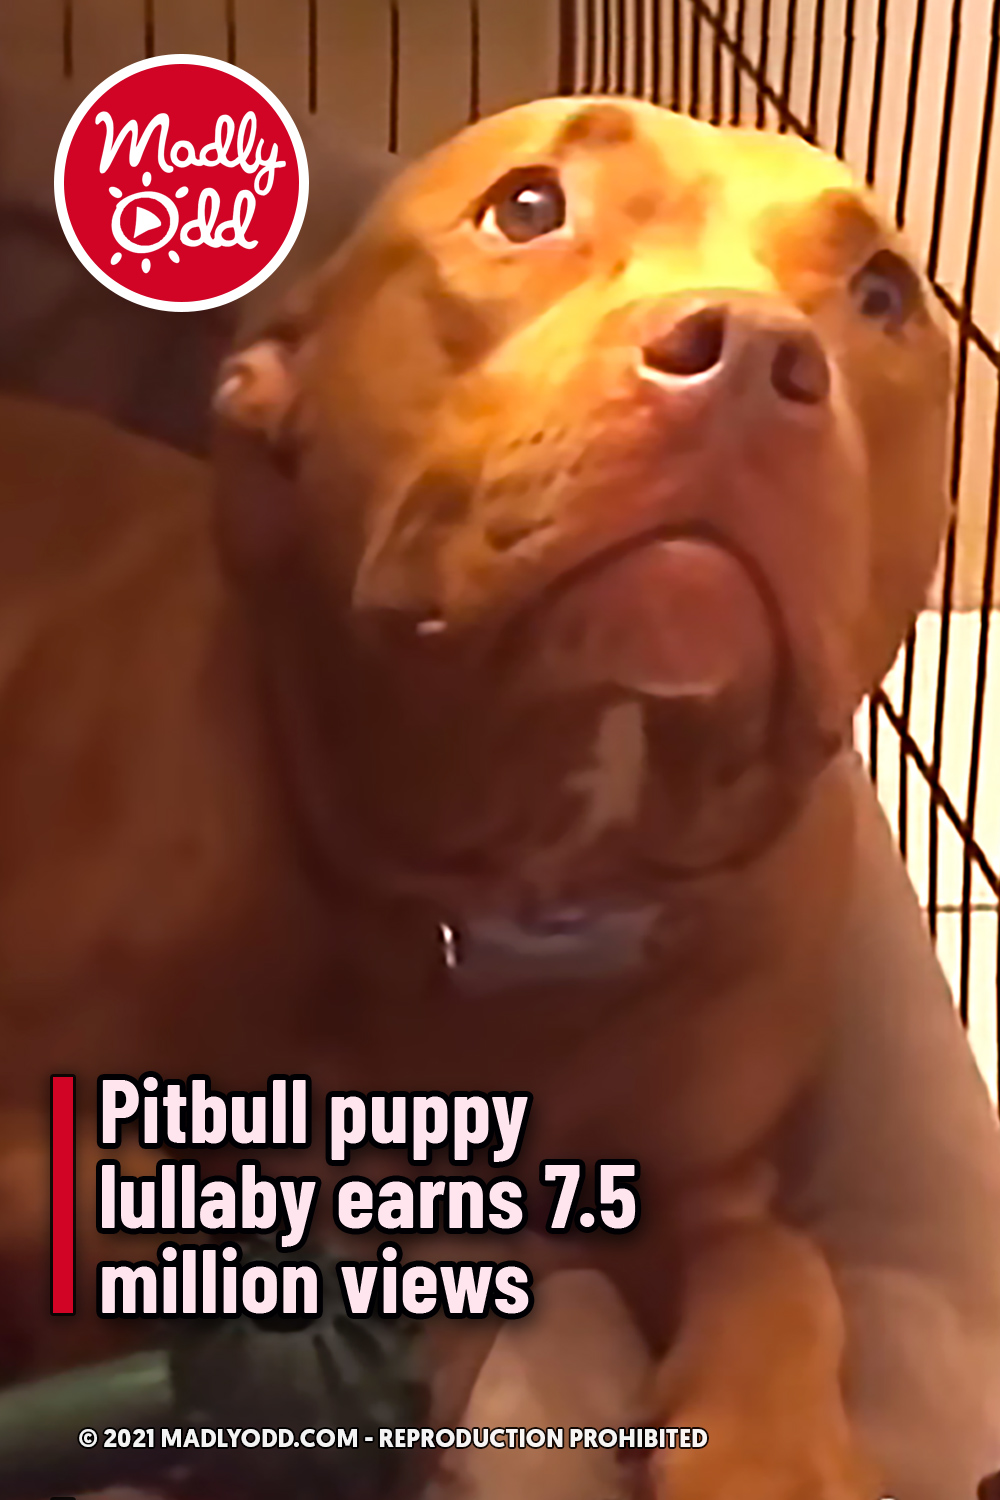 Pitbull puppy lullaby earns 7.5 million views